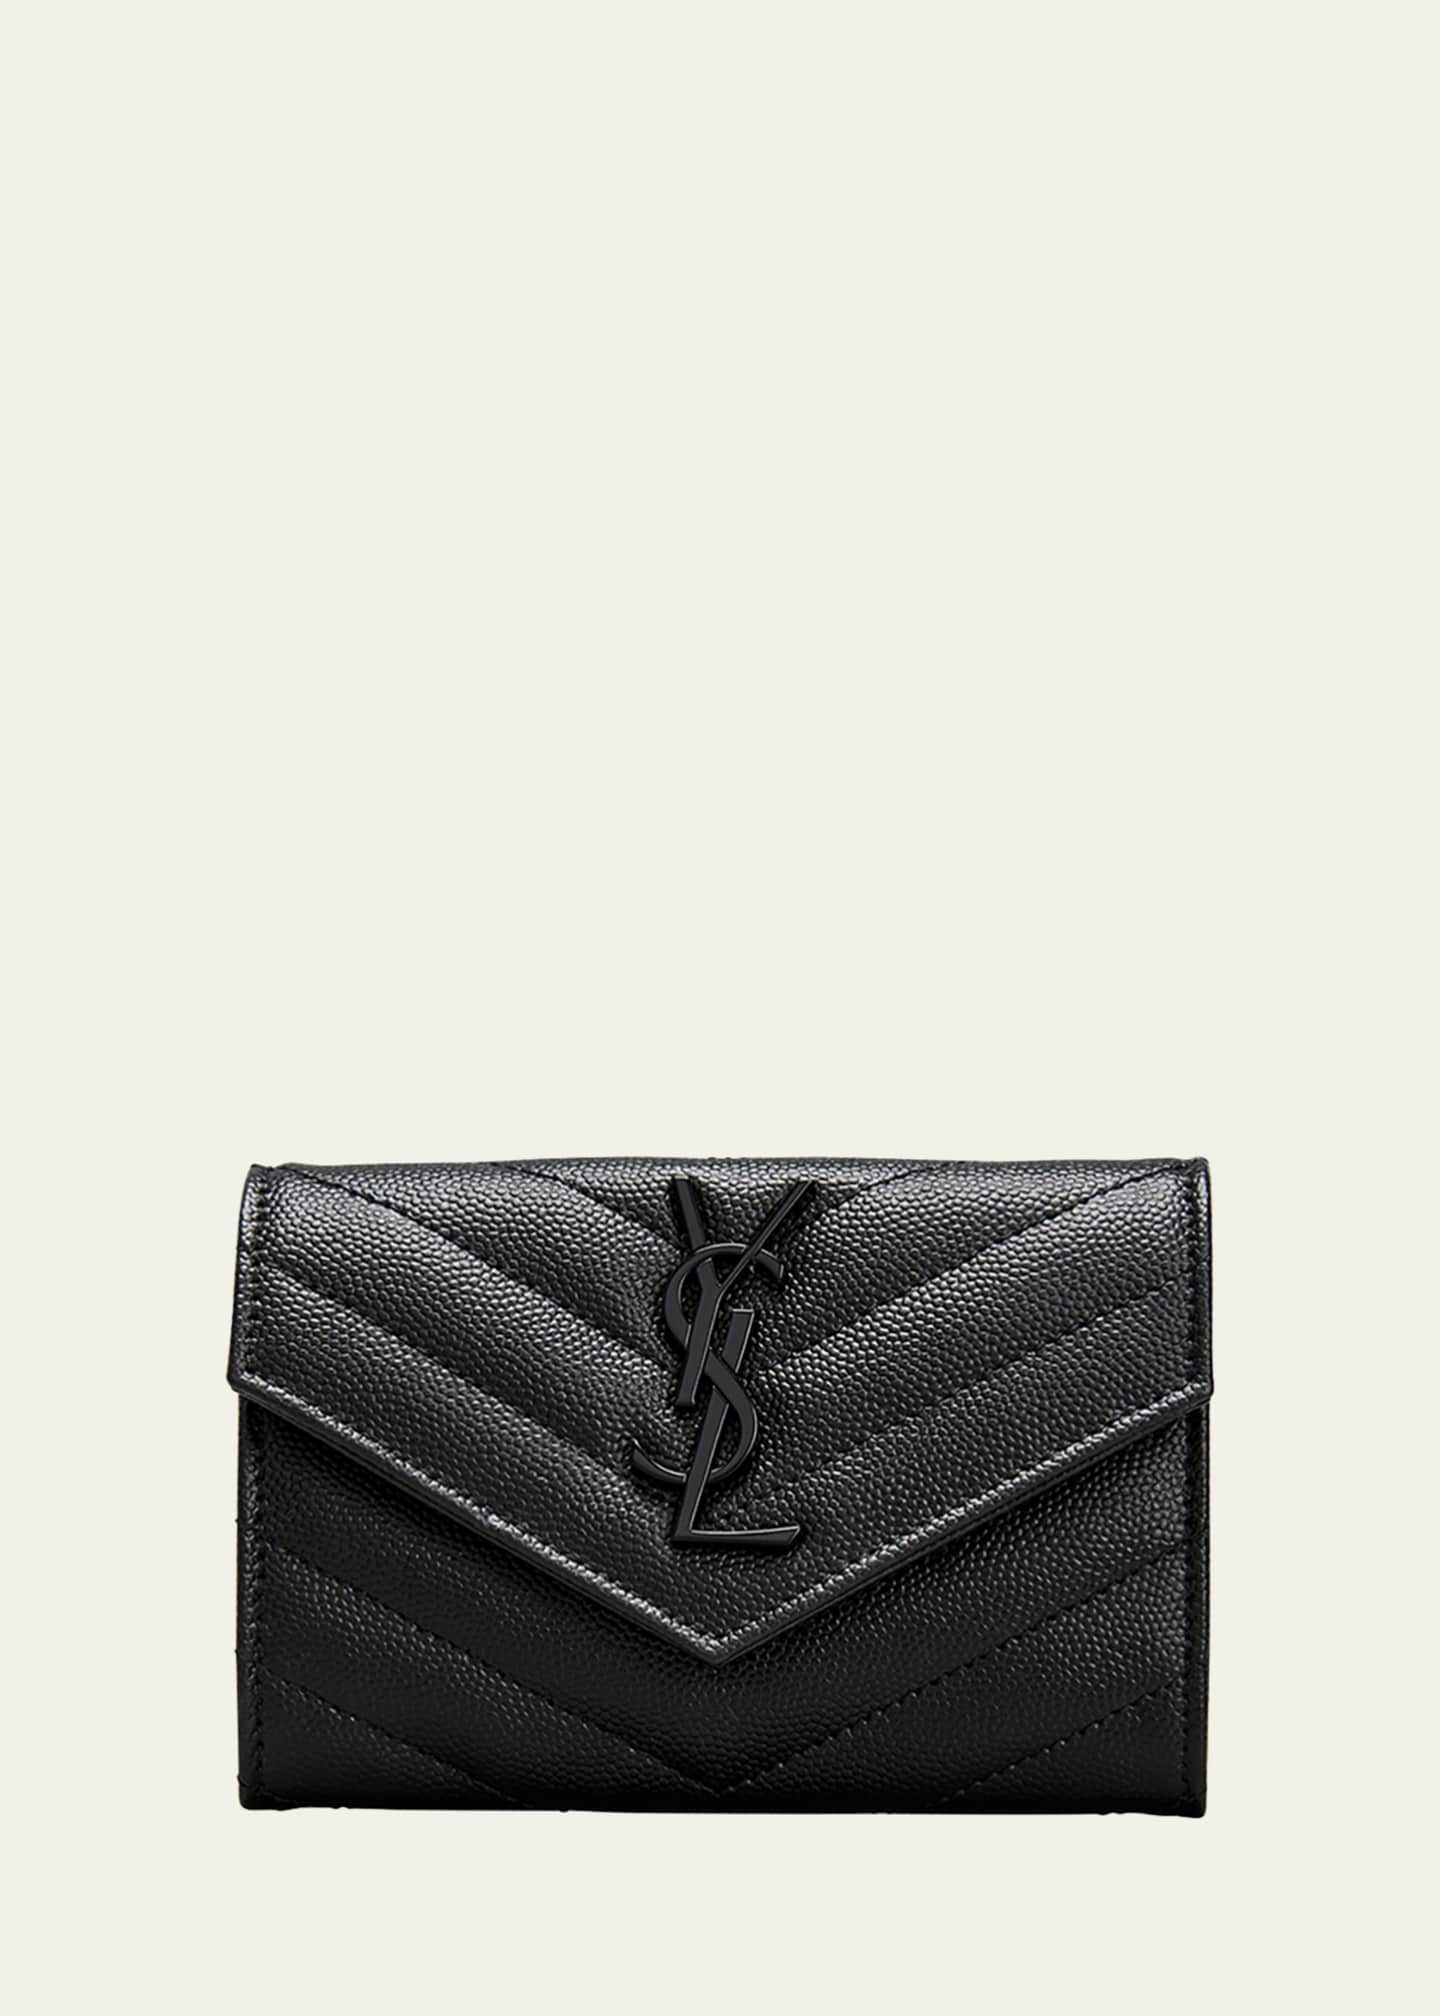 Saint Laurent Monogram Small Leather Wallet Black